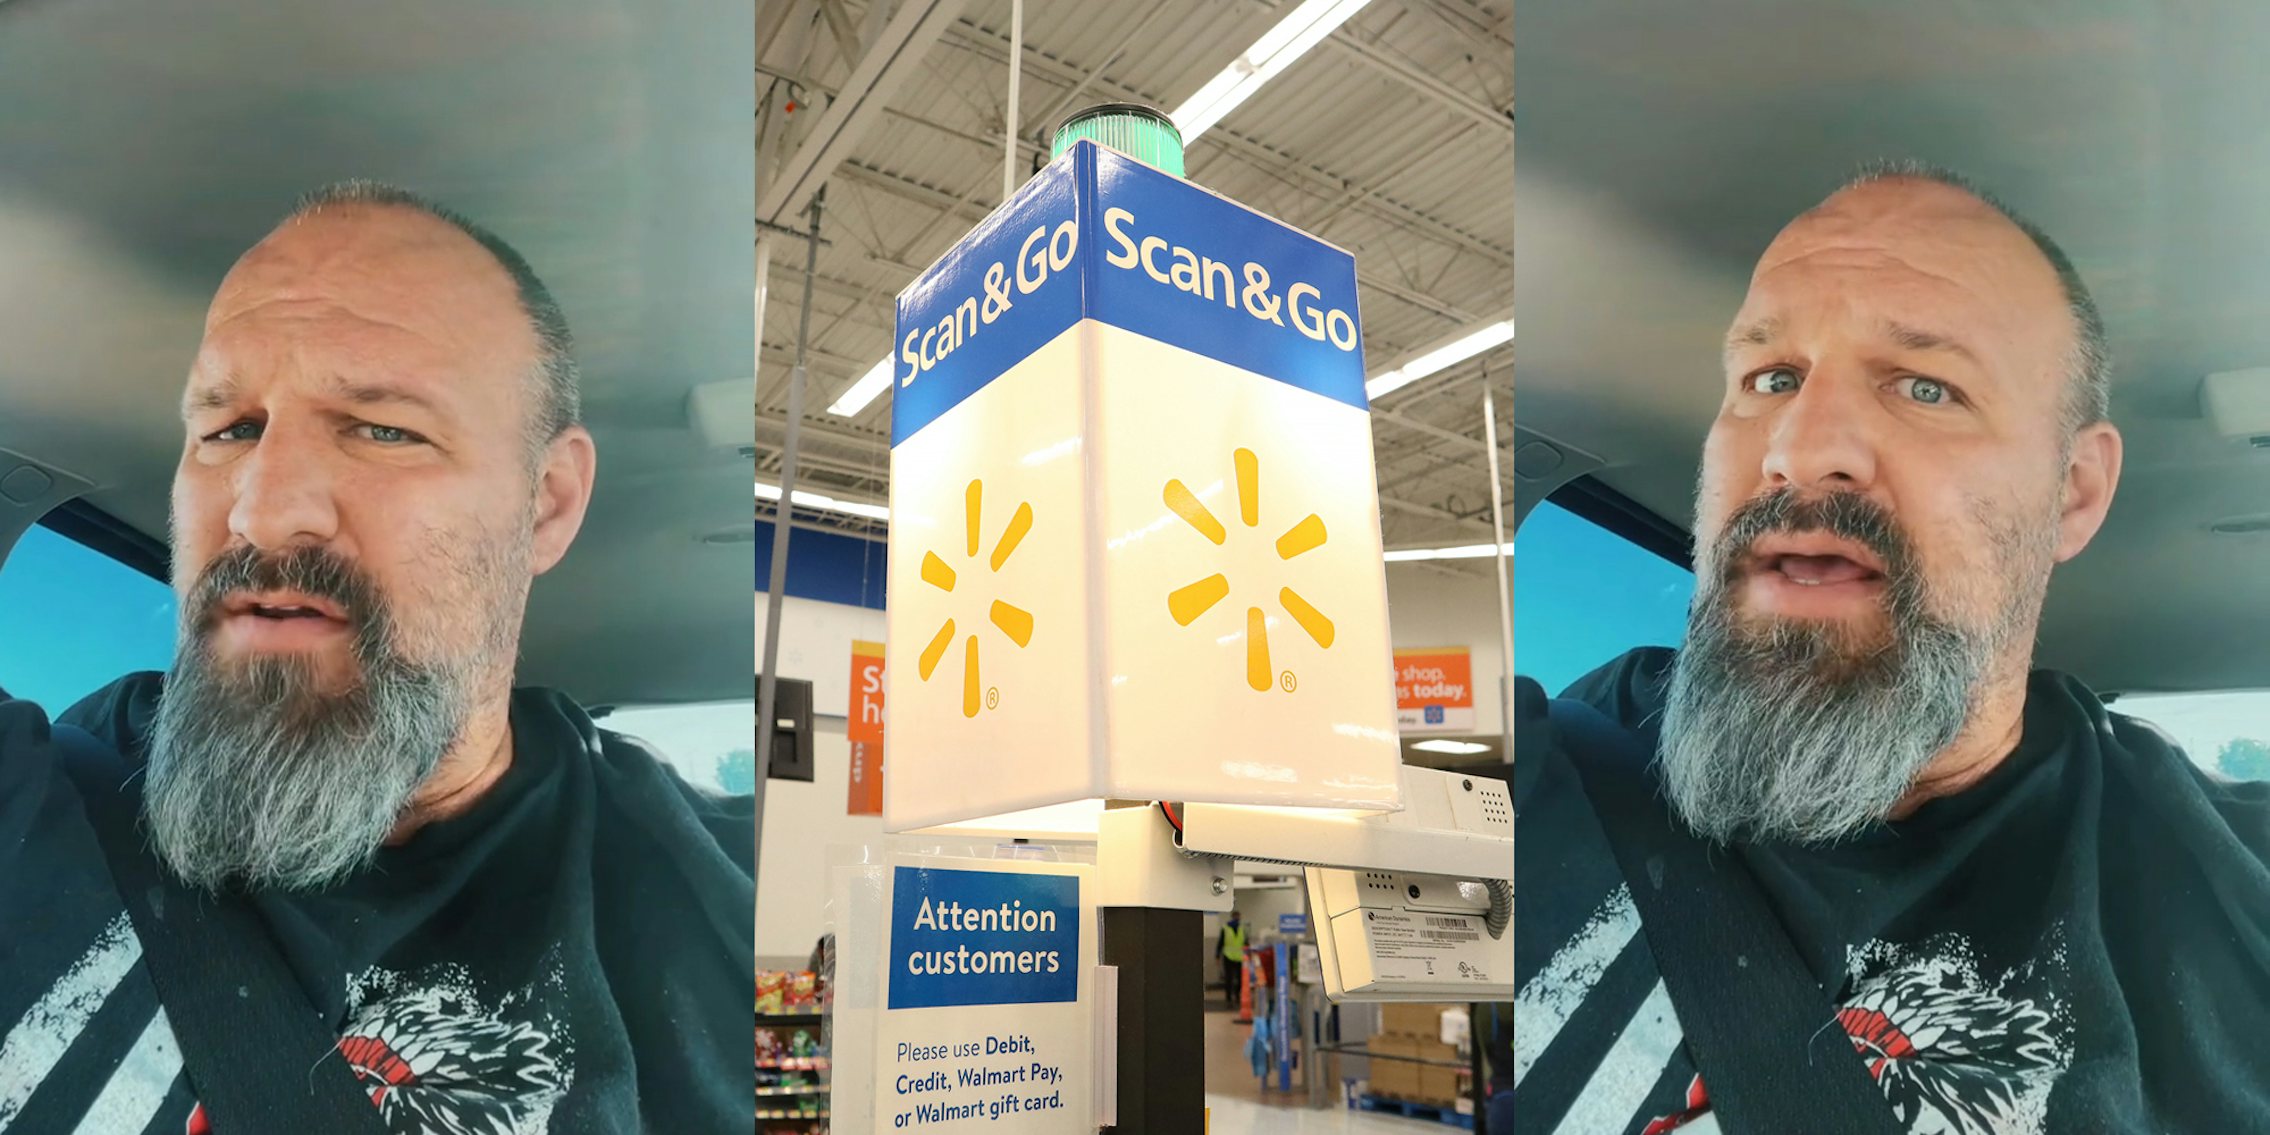 Walmart shopper speaking n car (l) Walmart elf checkout sign (c) Walmart shopper speaking in car (r)